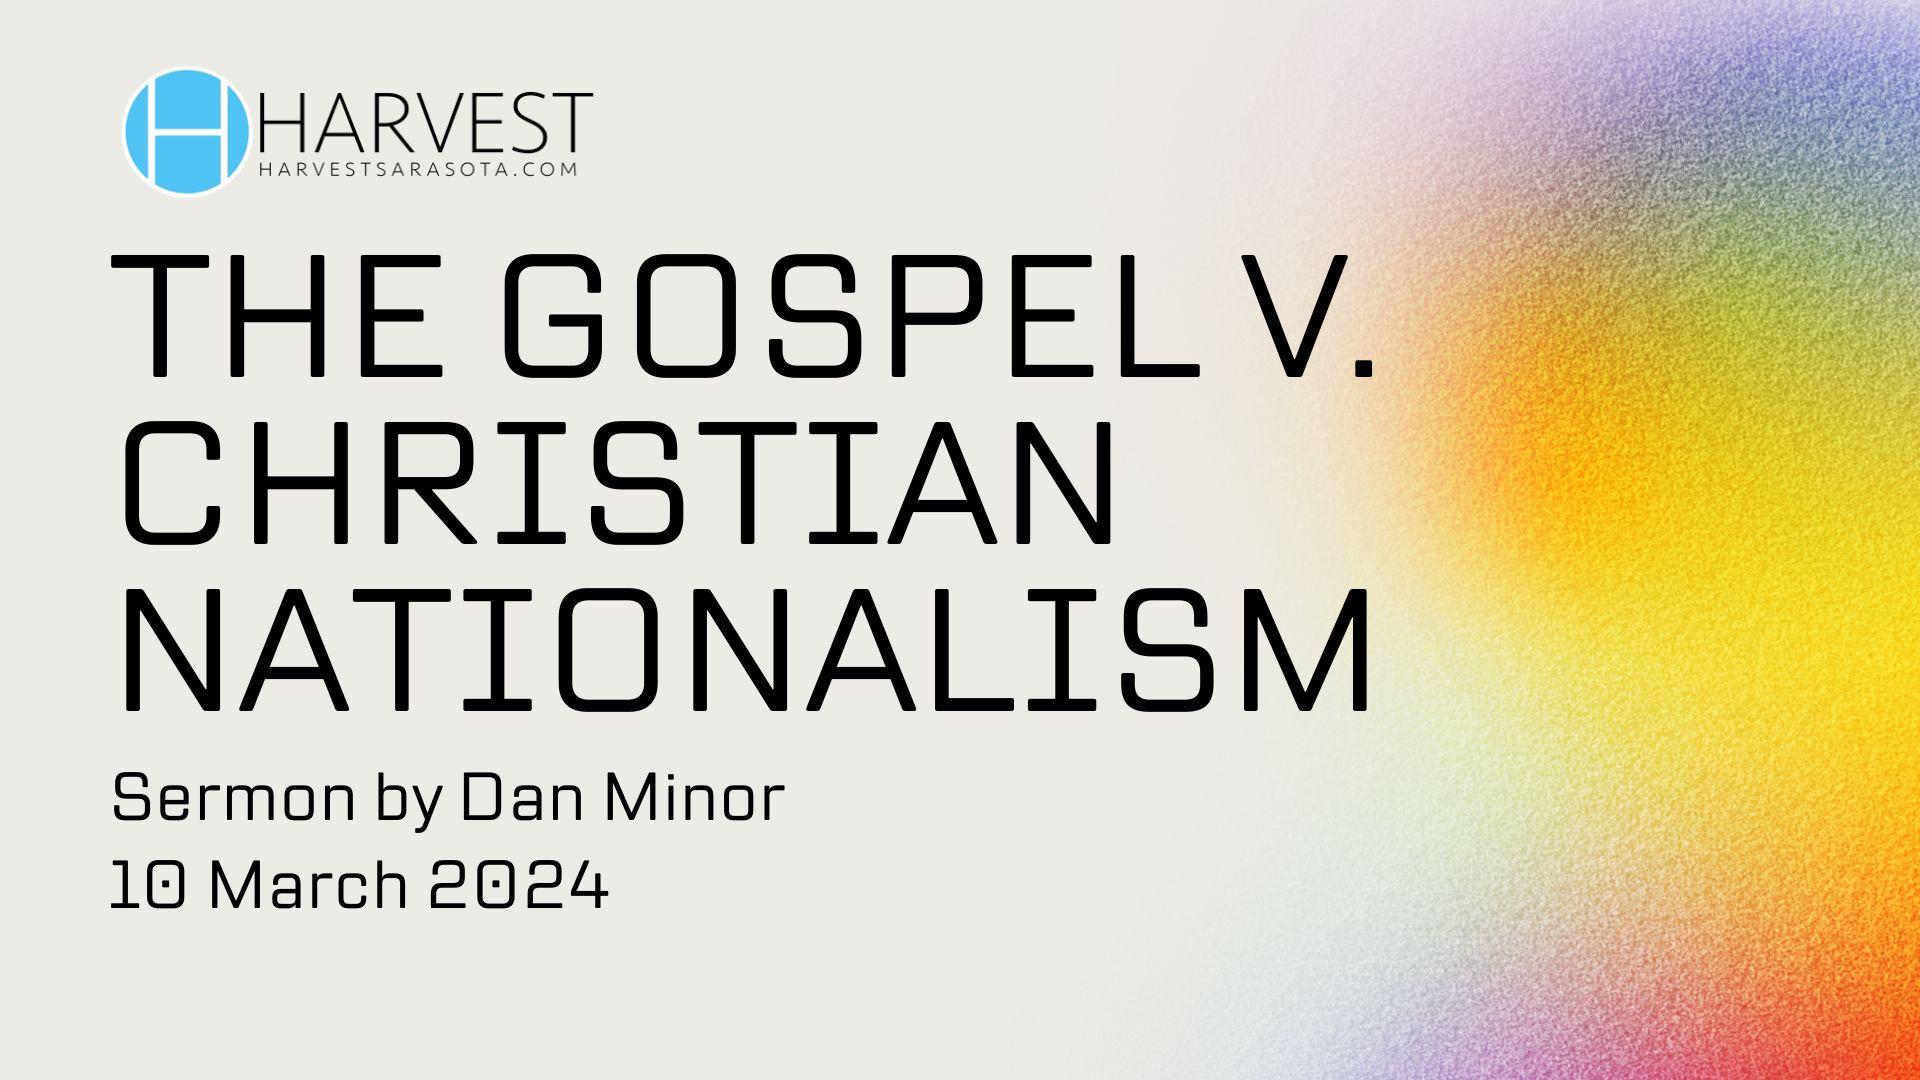 The Gospel v. Christian Nationalism